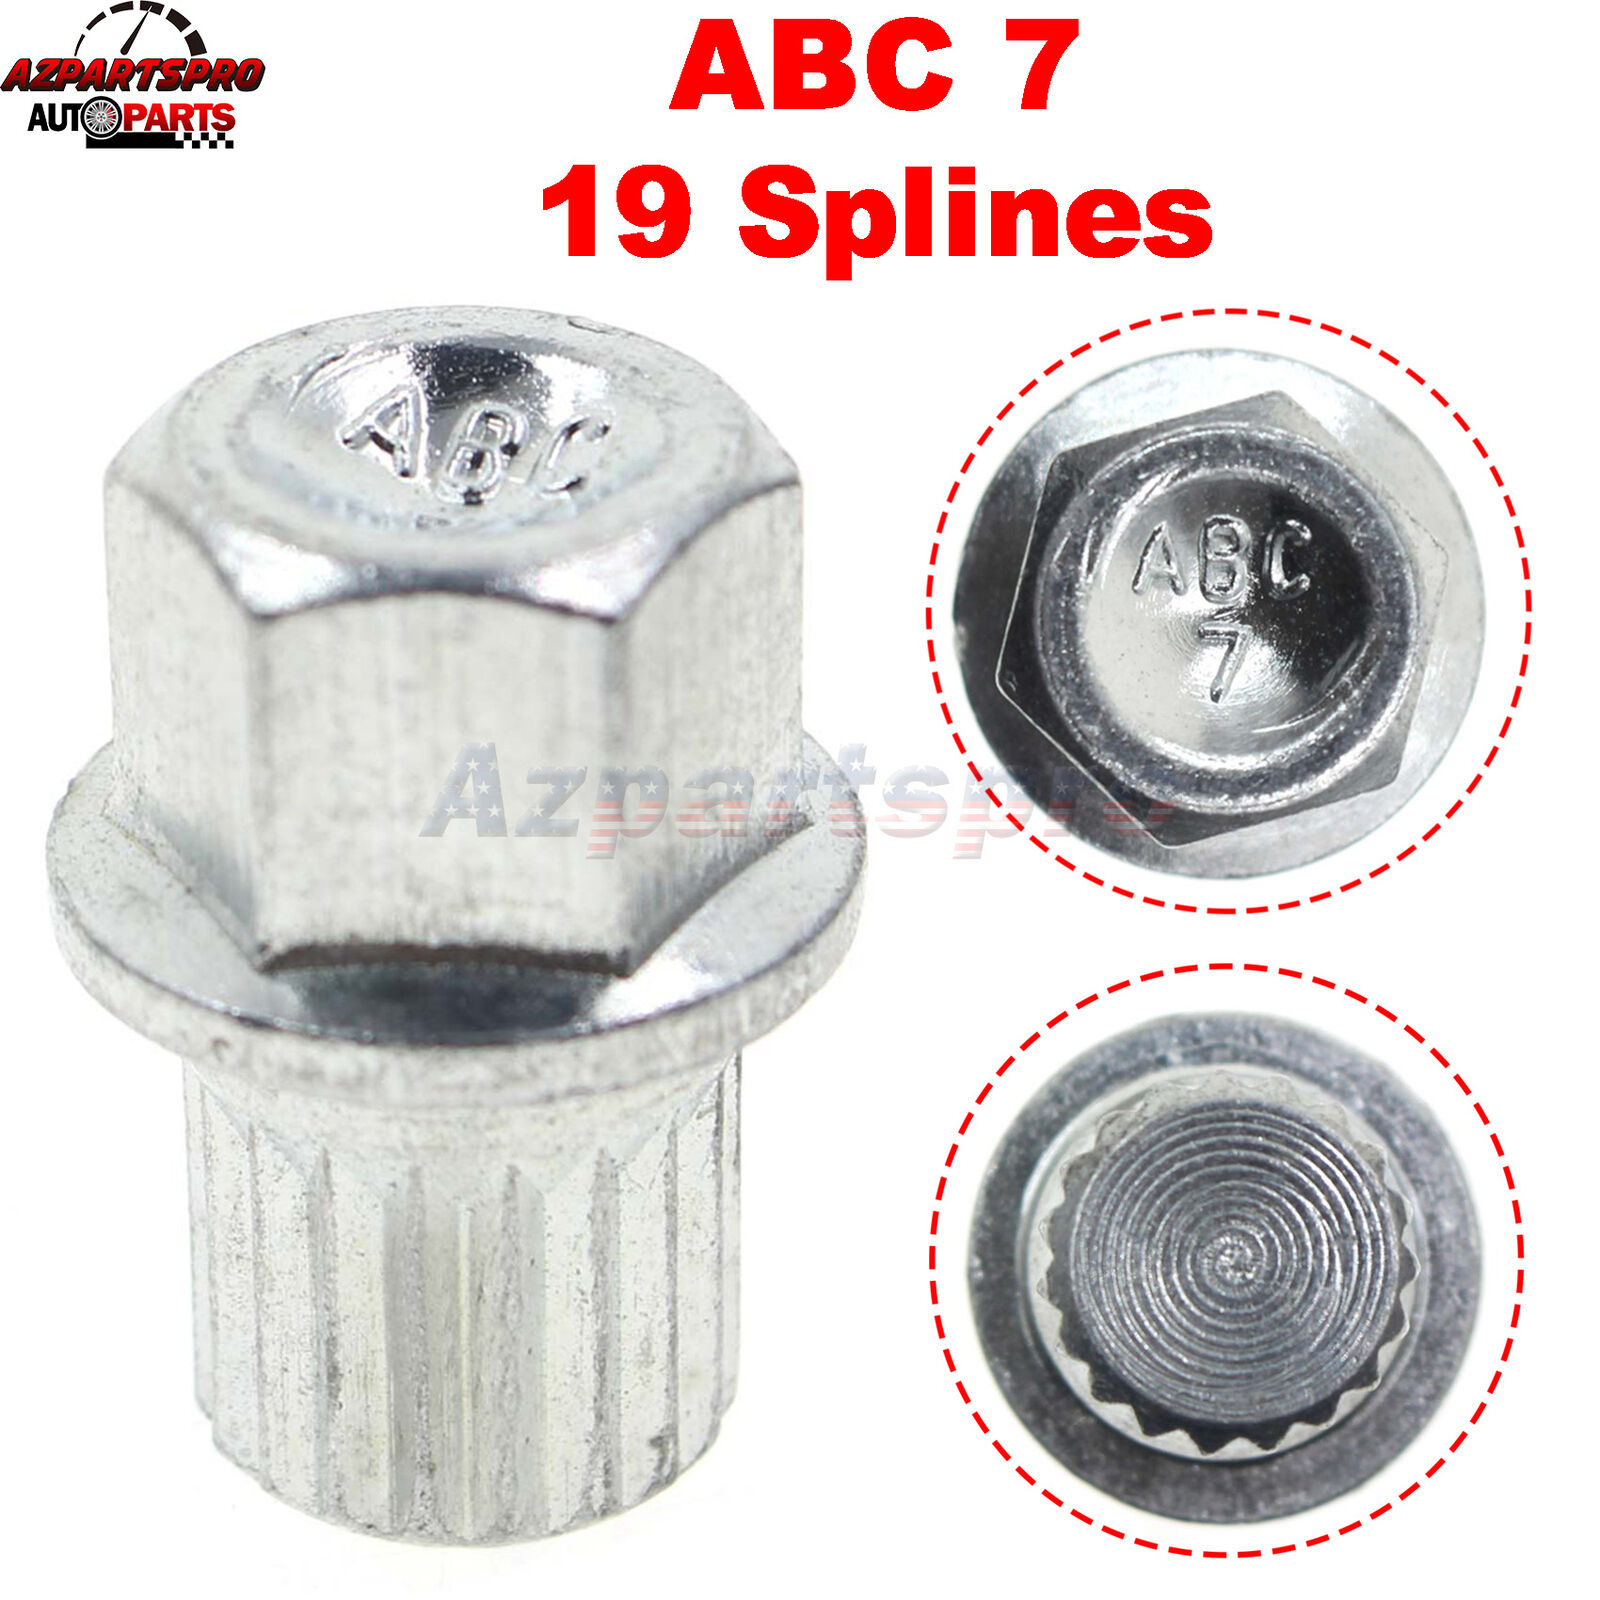 Wheel Lock Key 19 splines / ABC 7 for Volkswagen VW Audi  ( 19 pointed splines )